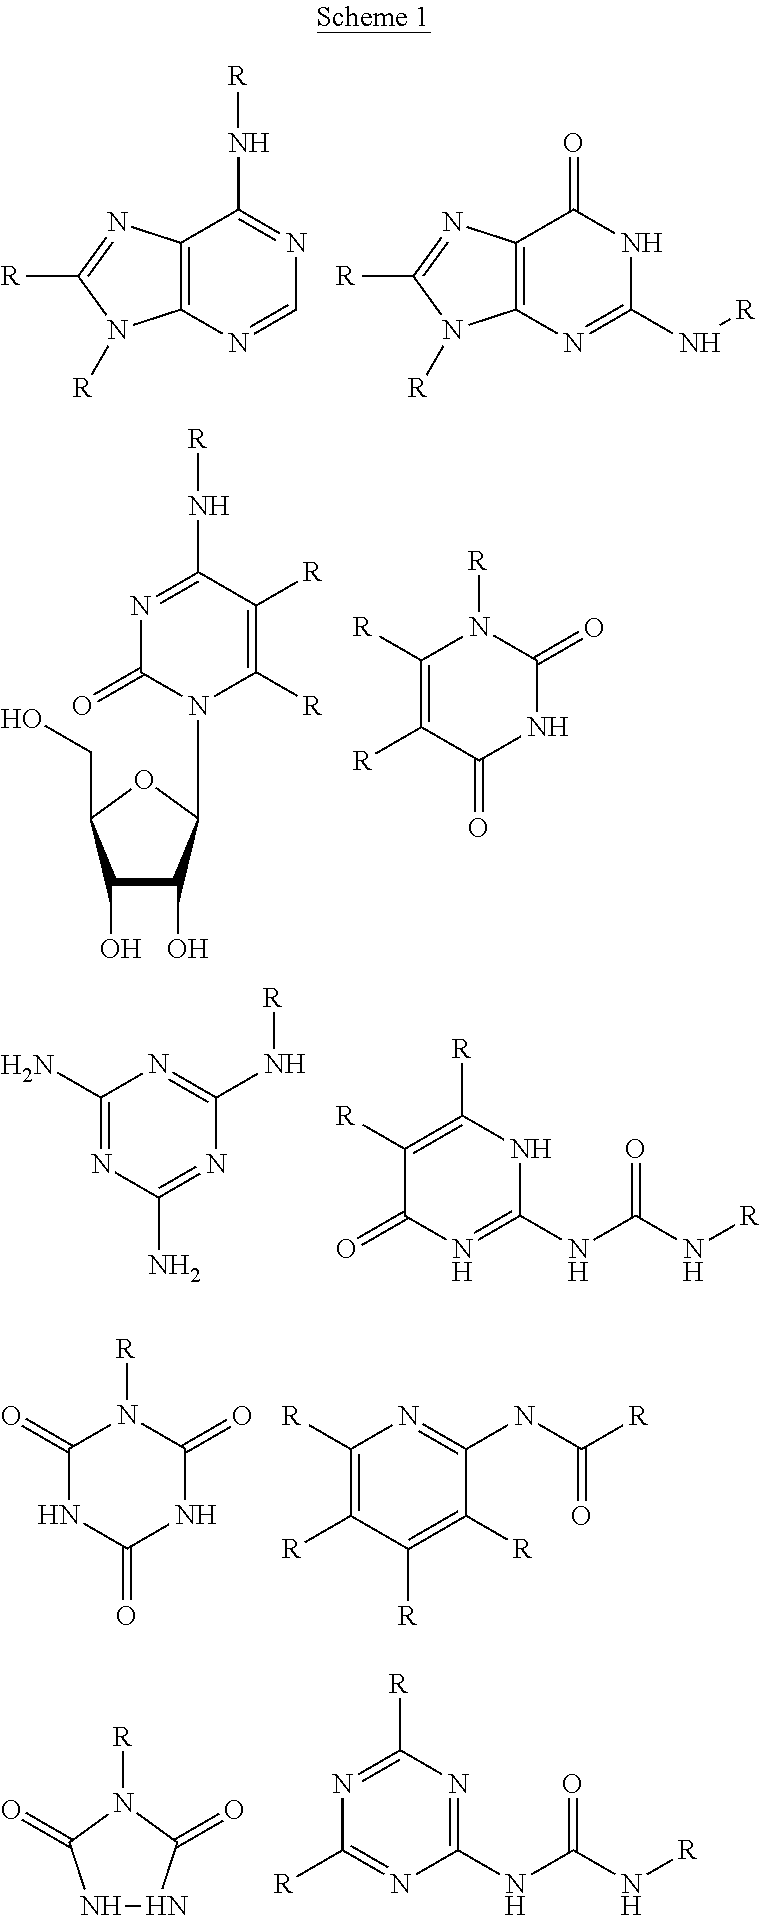 Fluorinated supramolecular polymers